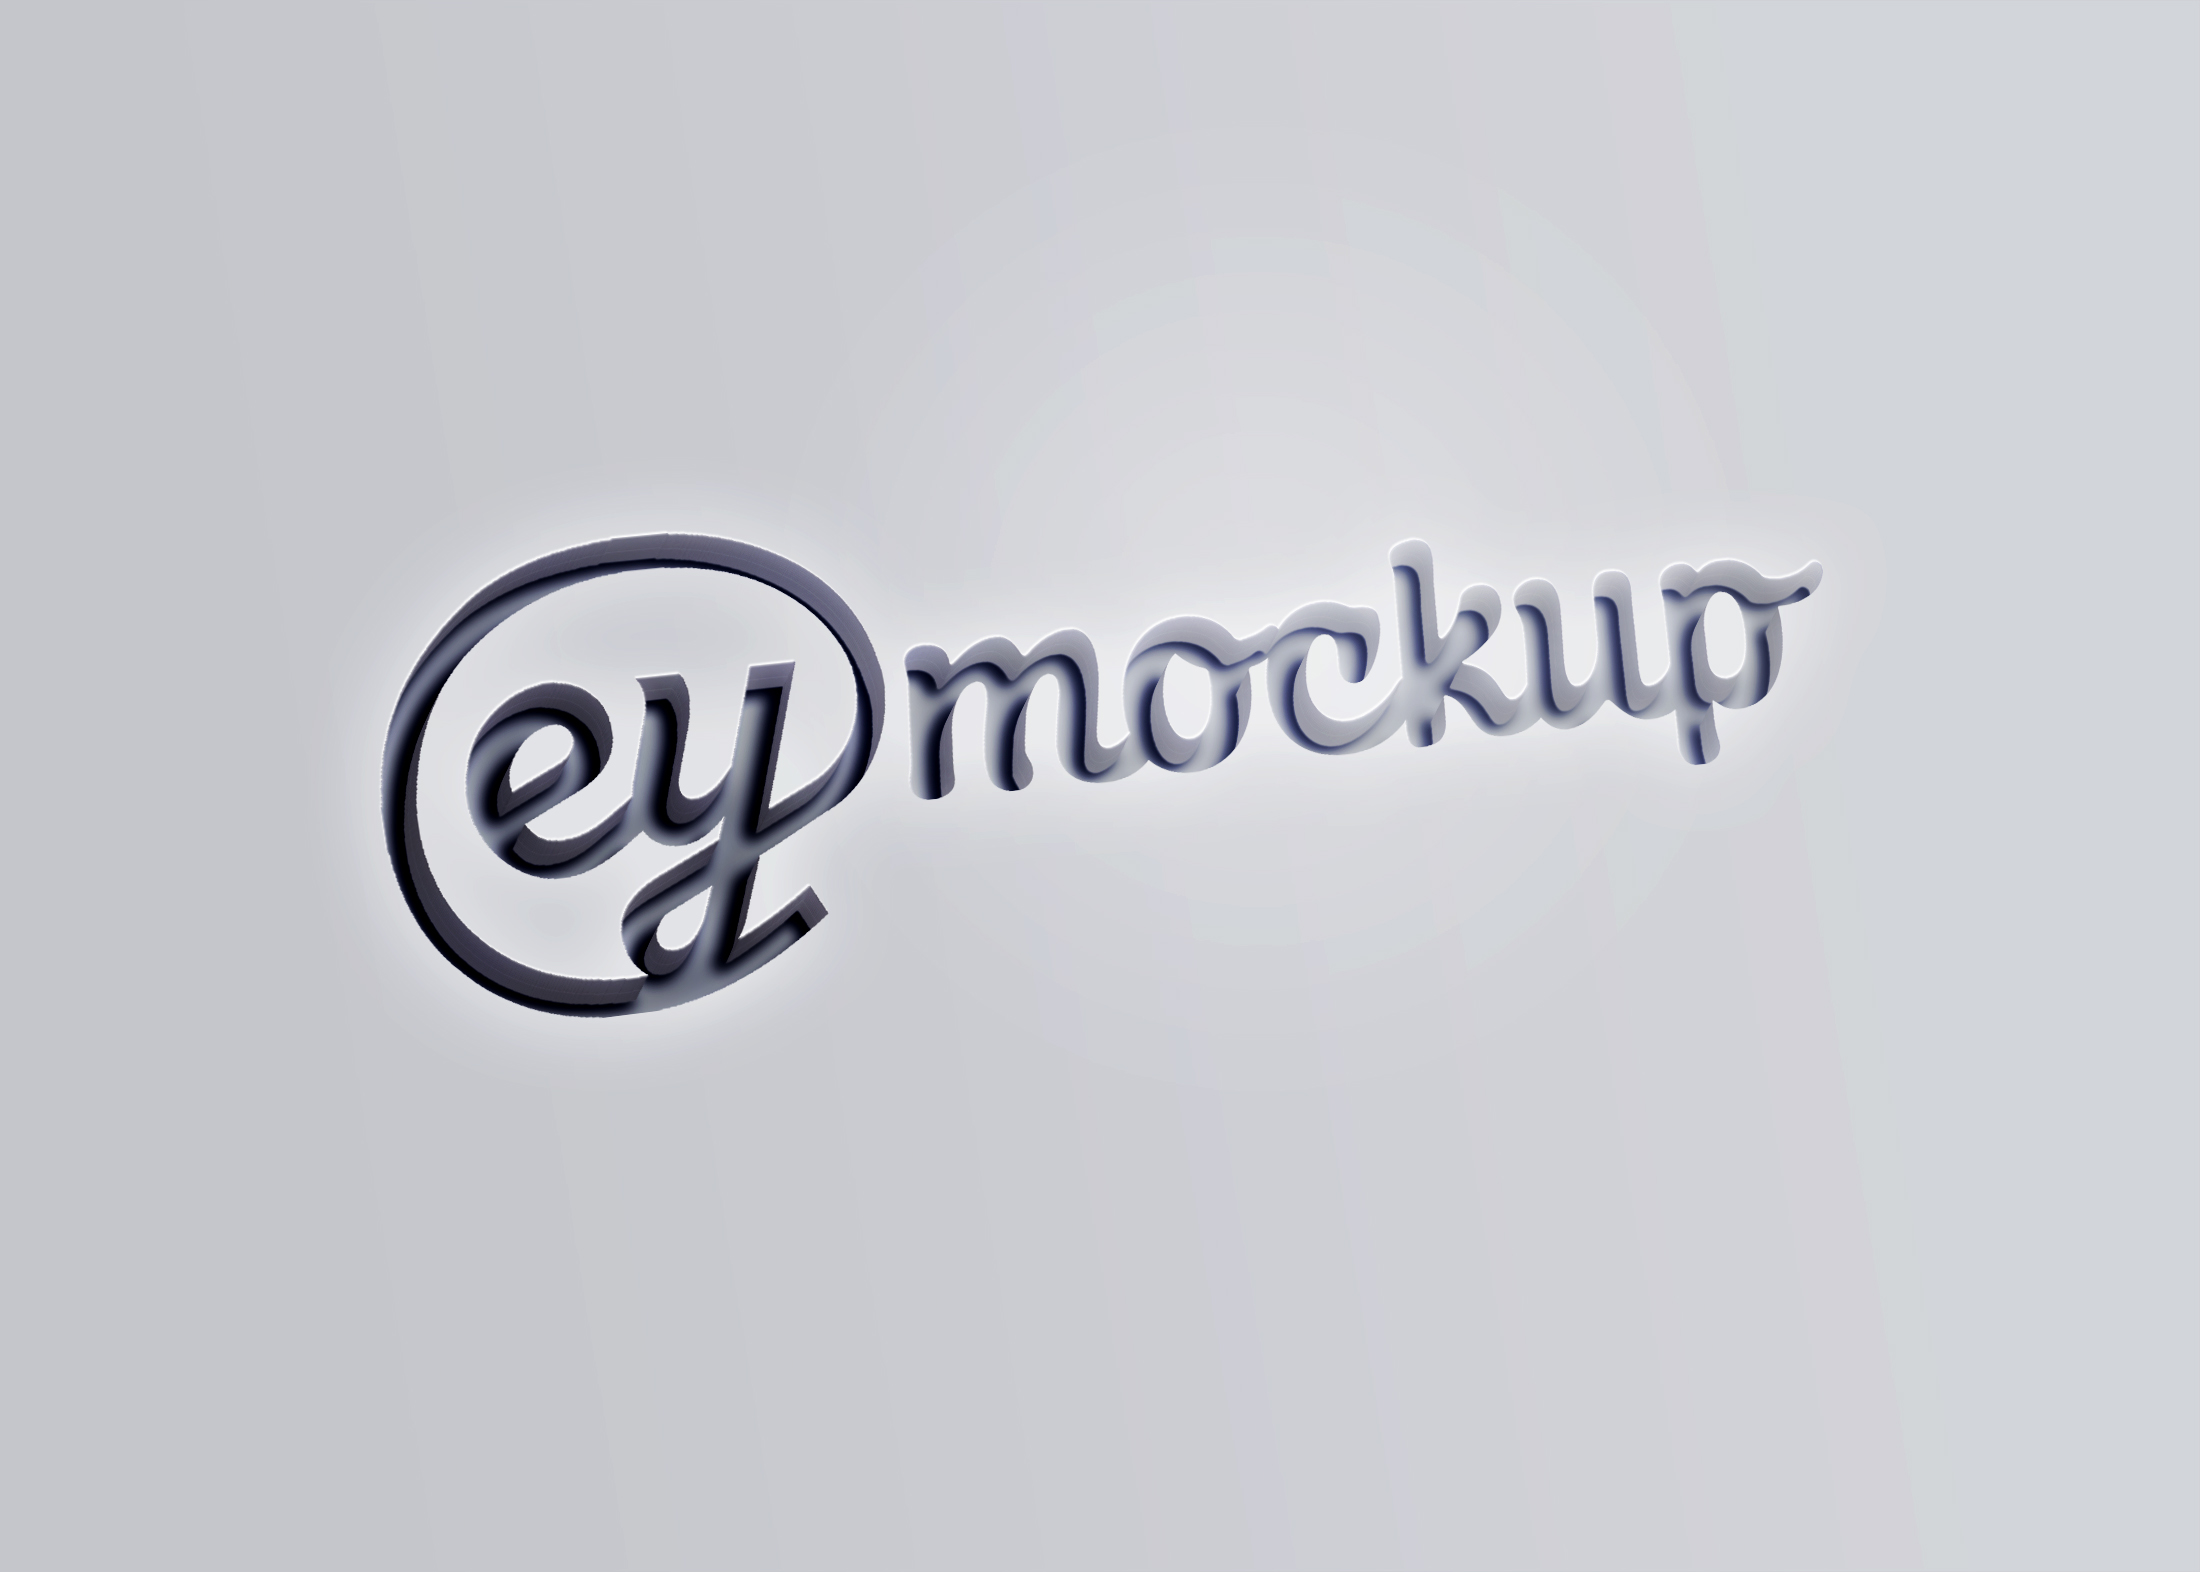 eymockup Laser Cut Logo Mockup